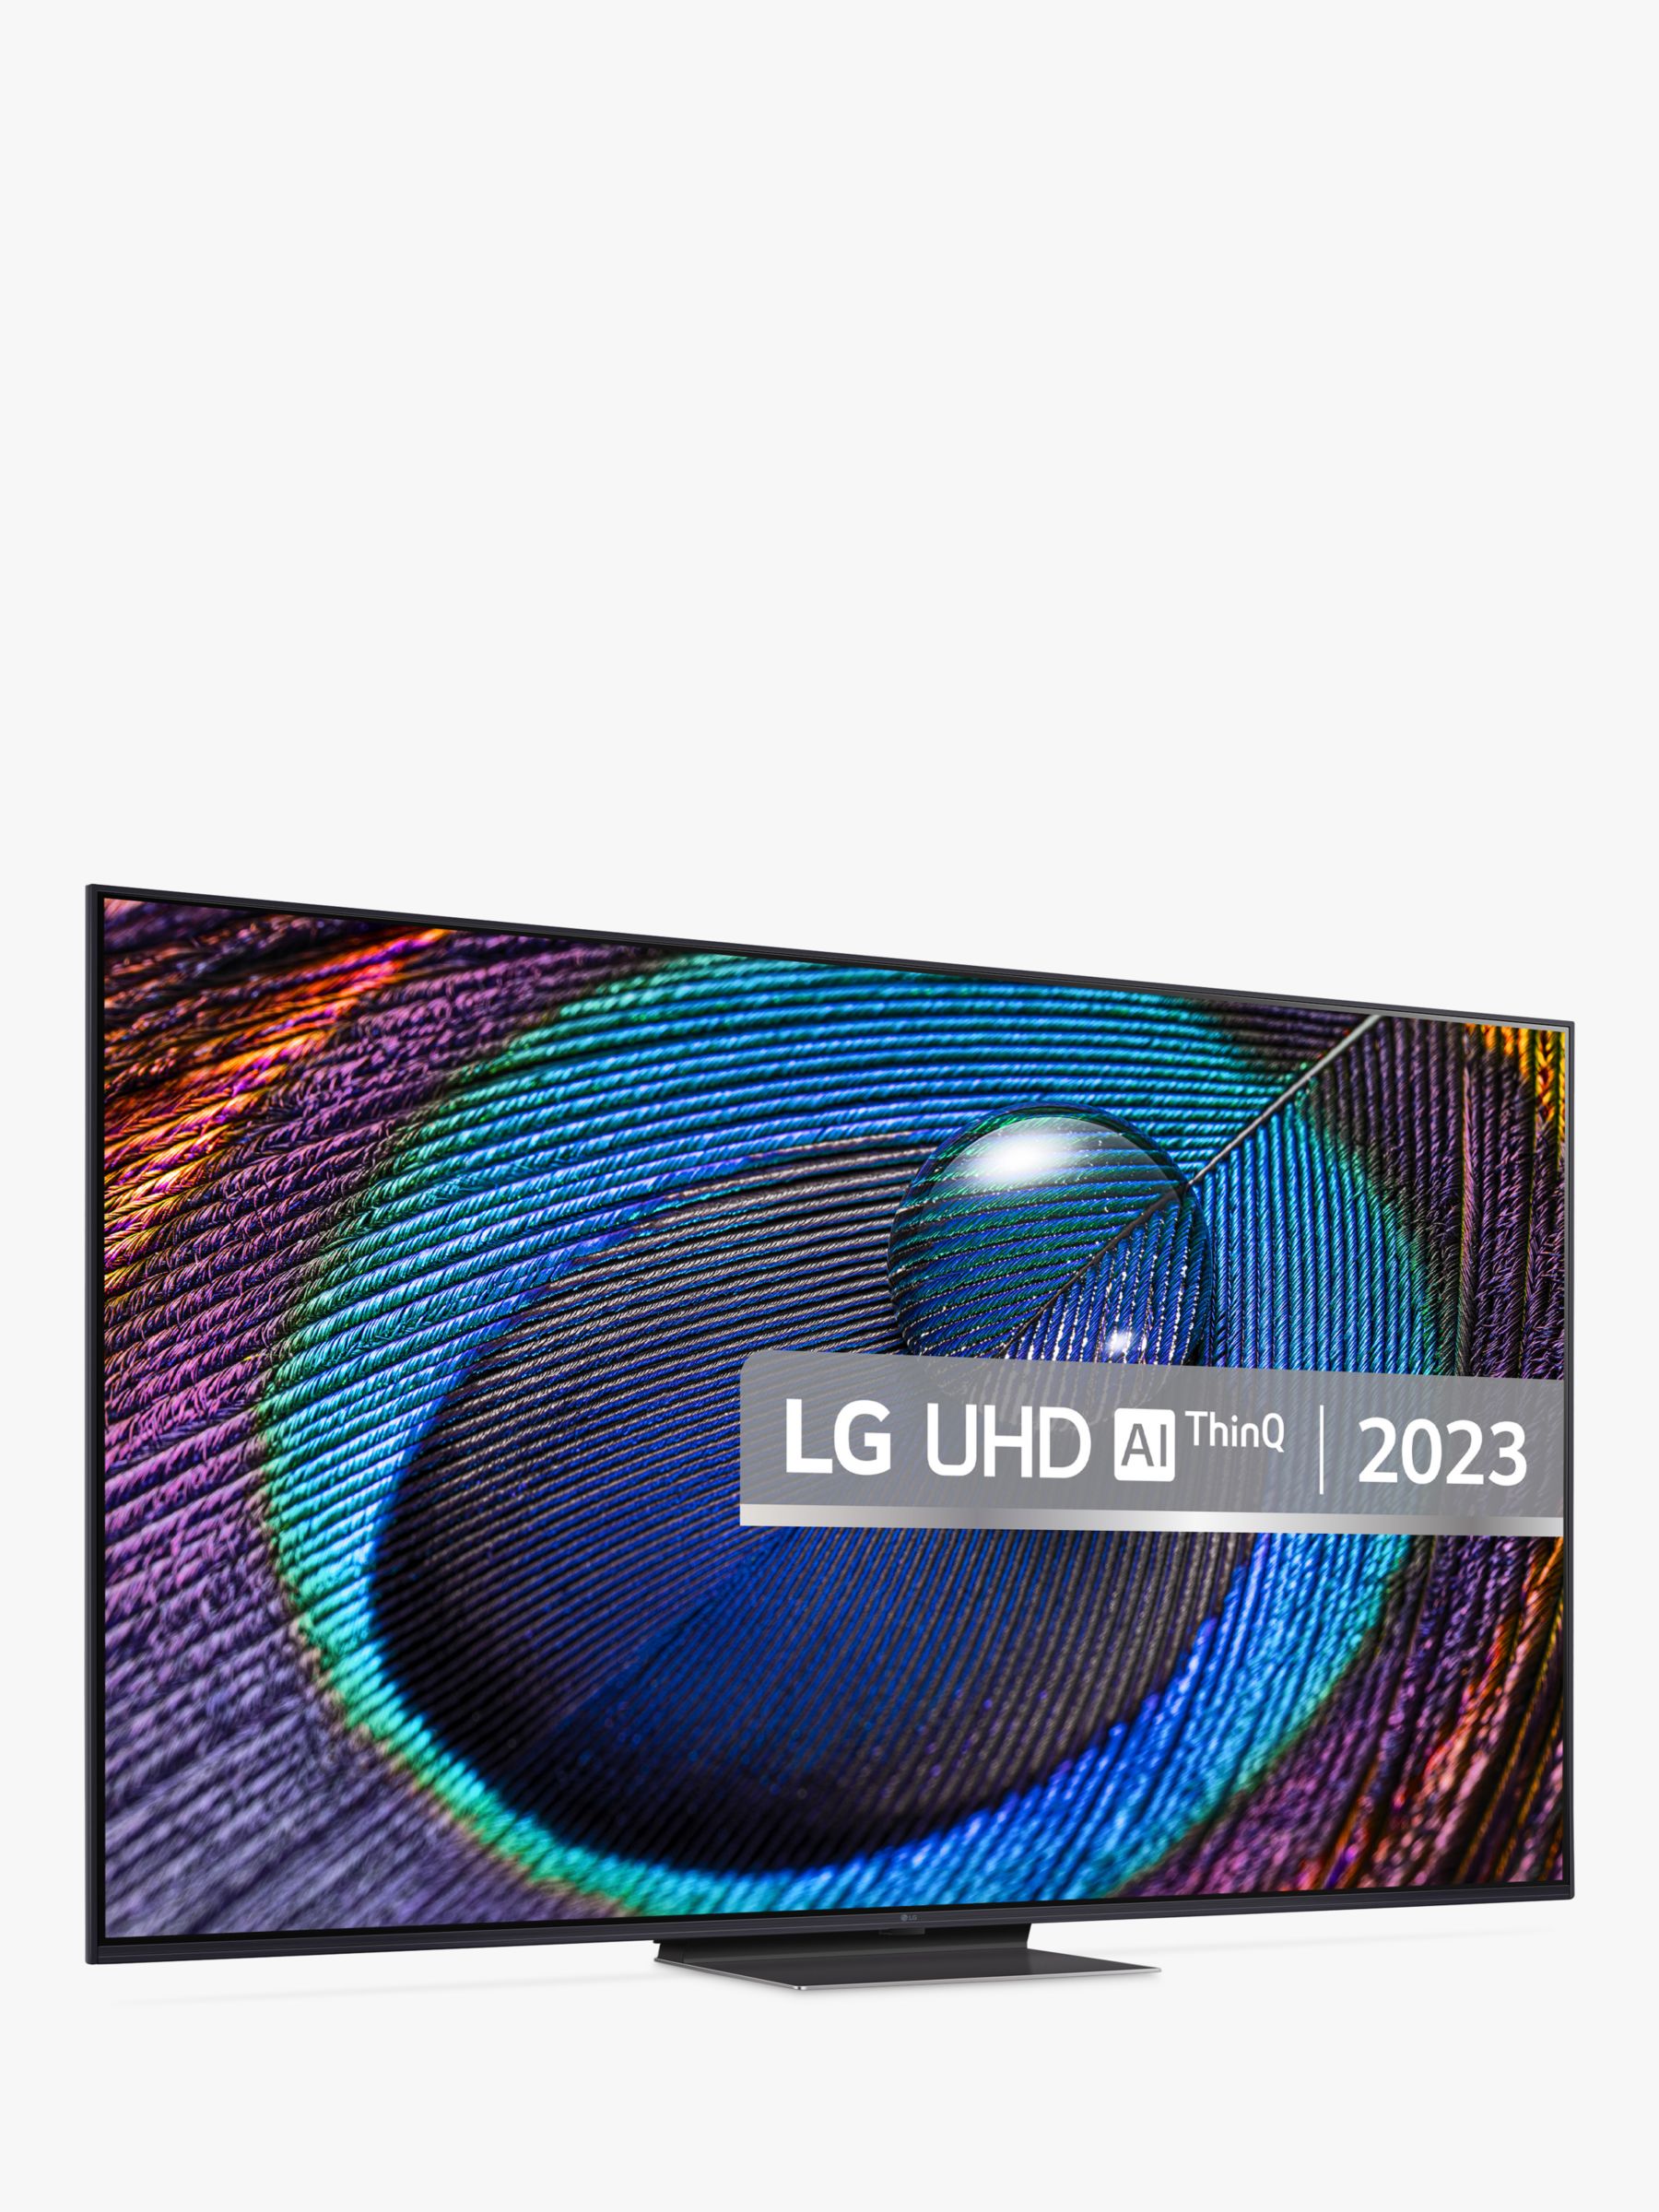  LG 4K Region Free Smart WiFi UHD 4K Ultra HD Blu-ray